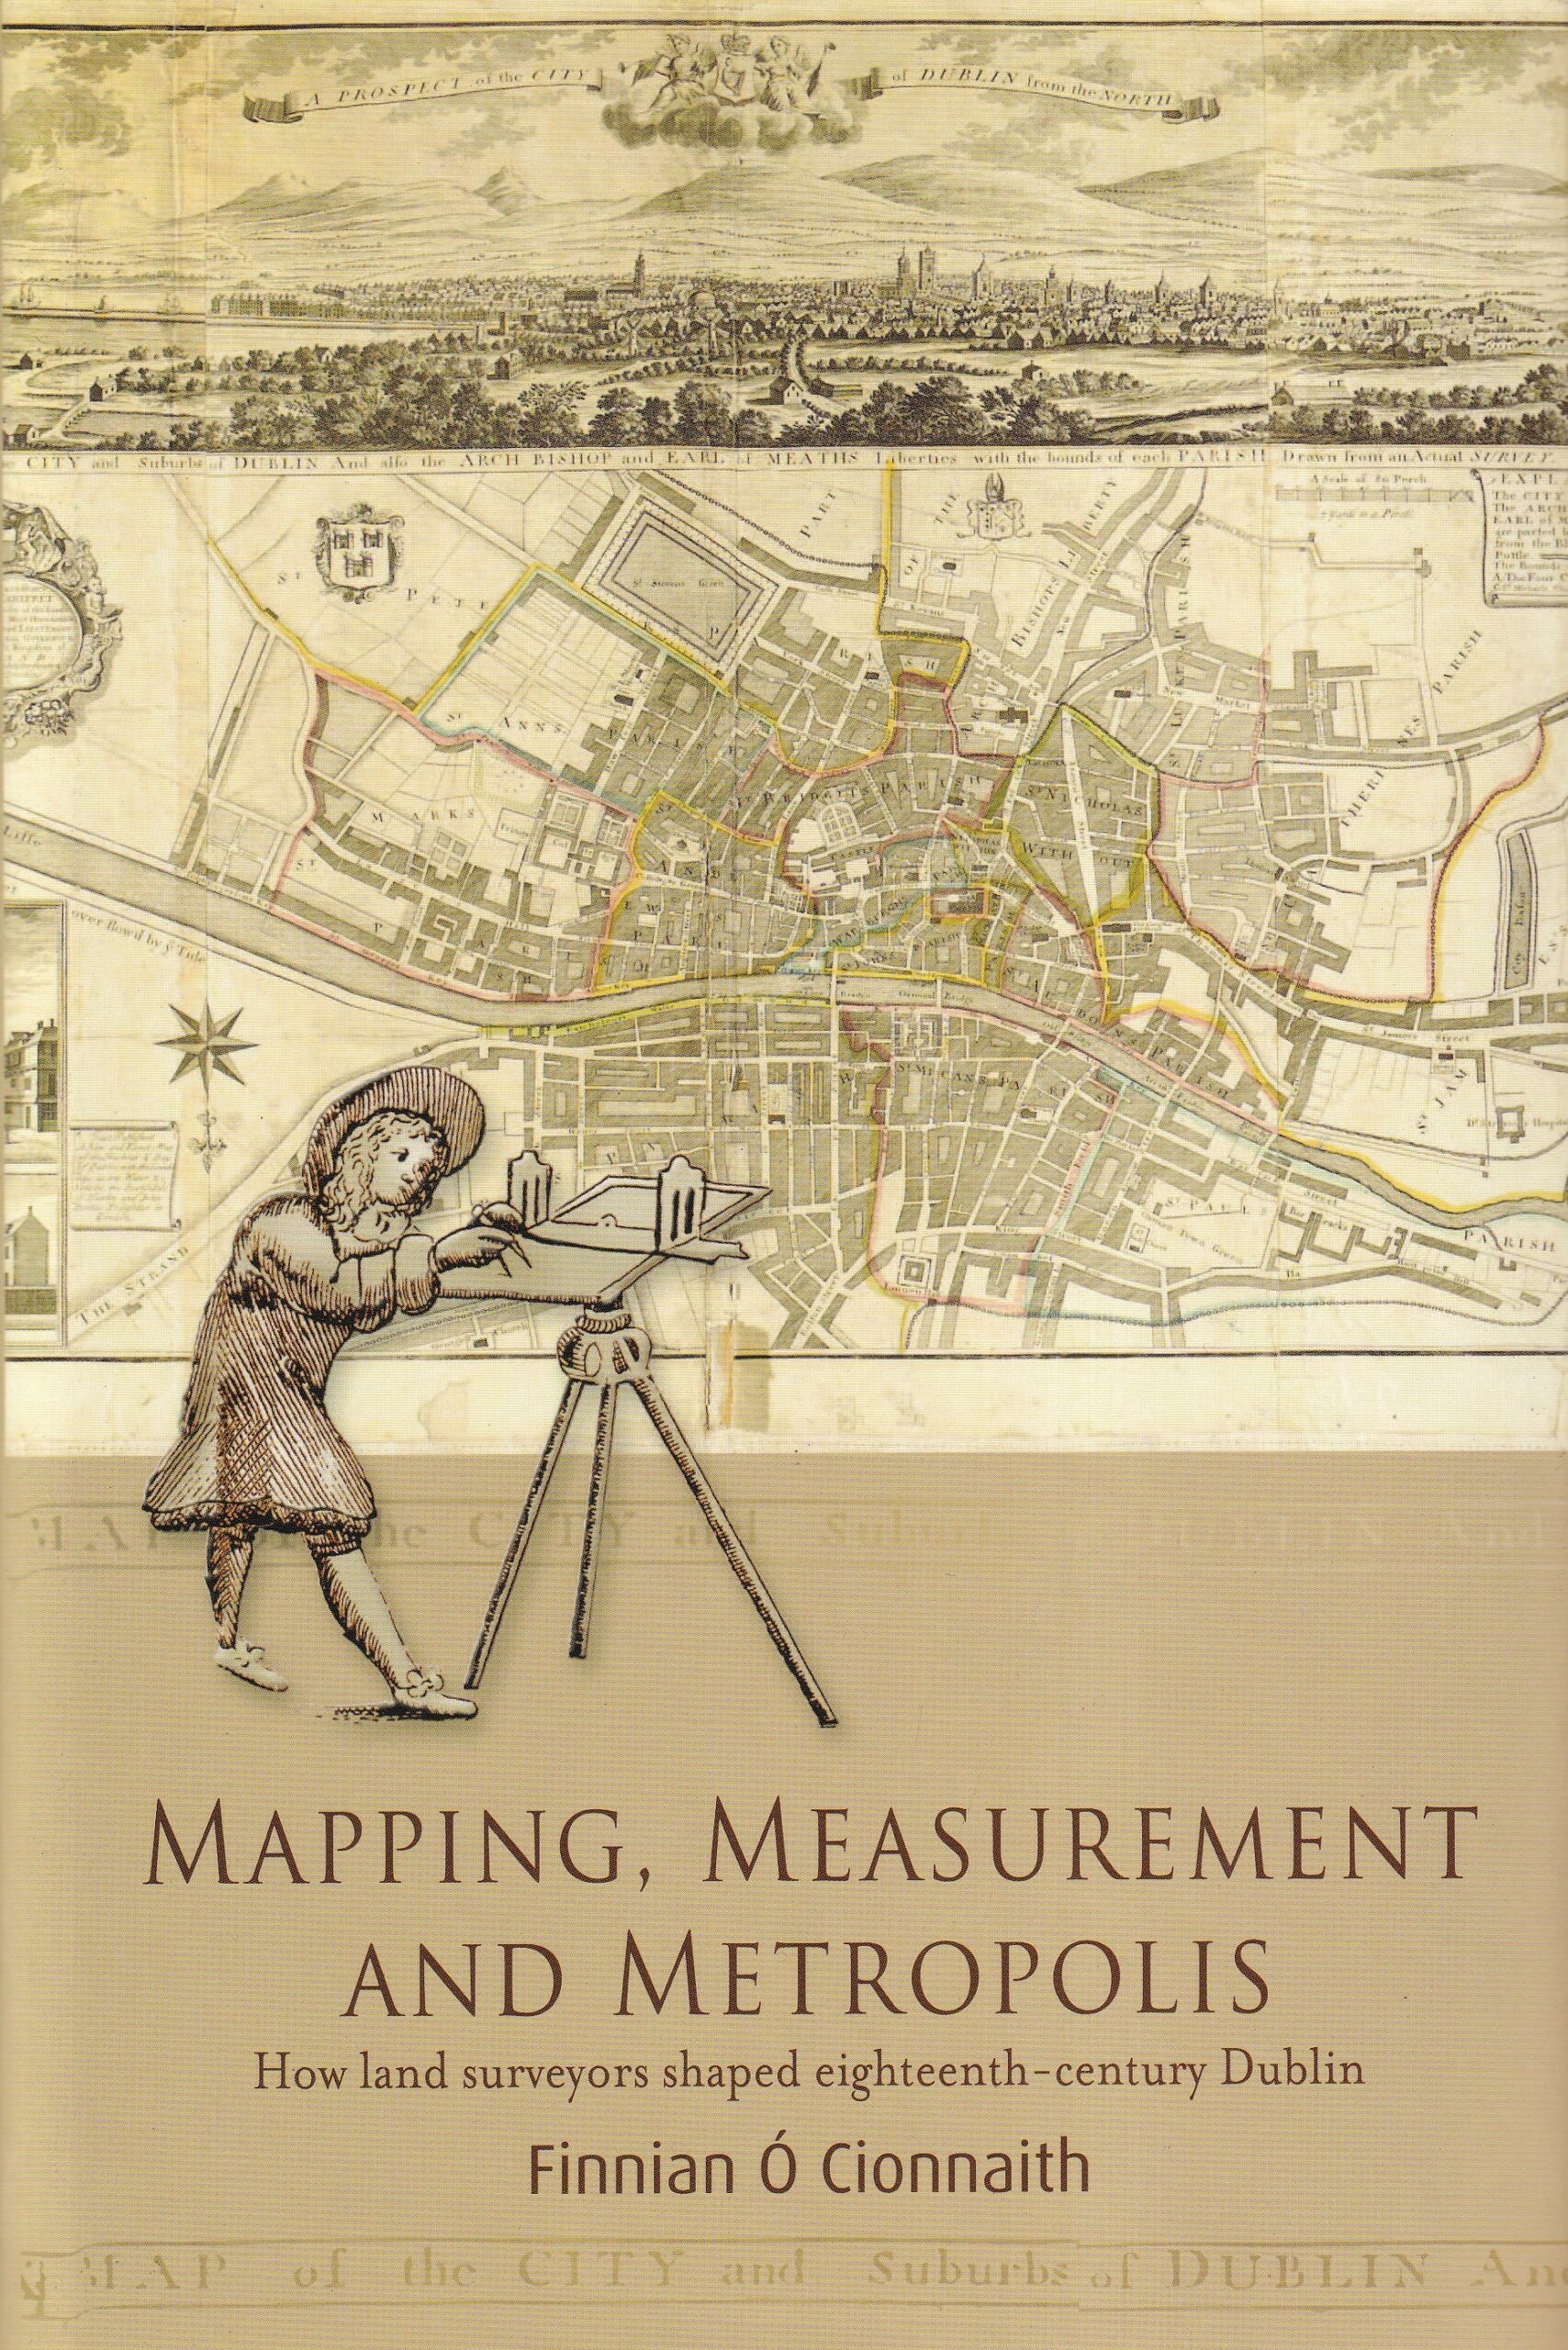 Mapping, Measurement and Metropolis: How Land Surveyors Shaped Eigtheenth-Century Dublin by Finnian Ó Cionnaith